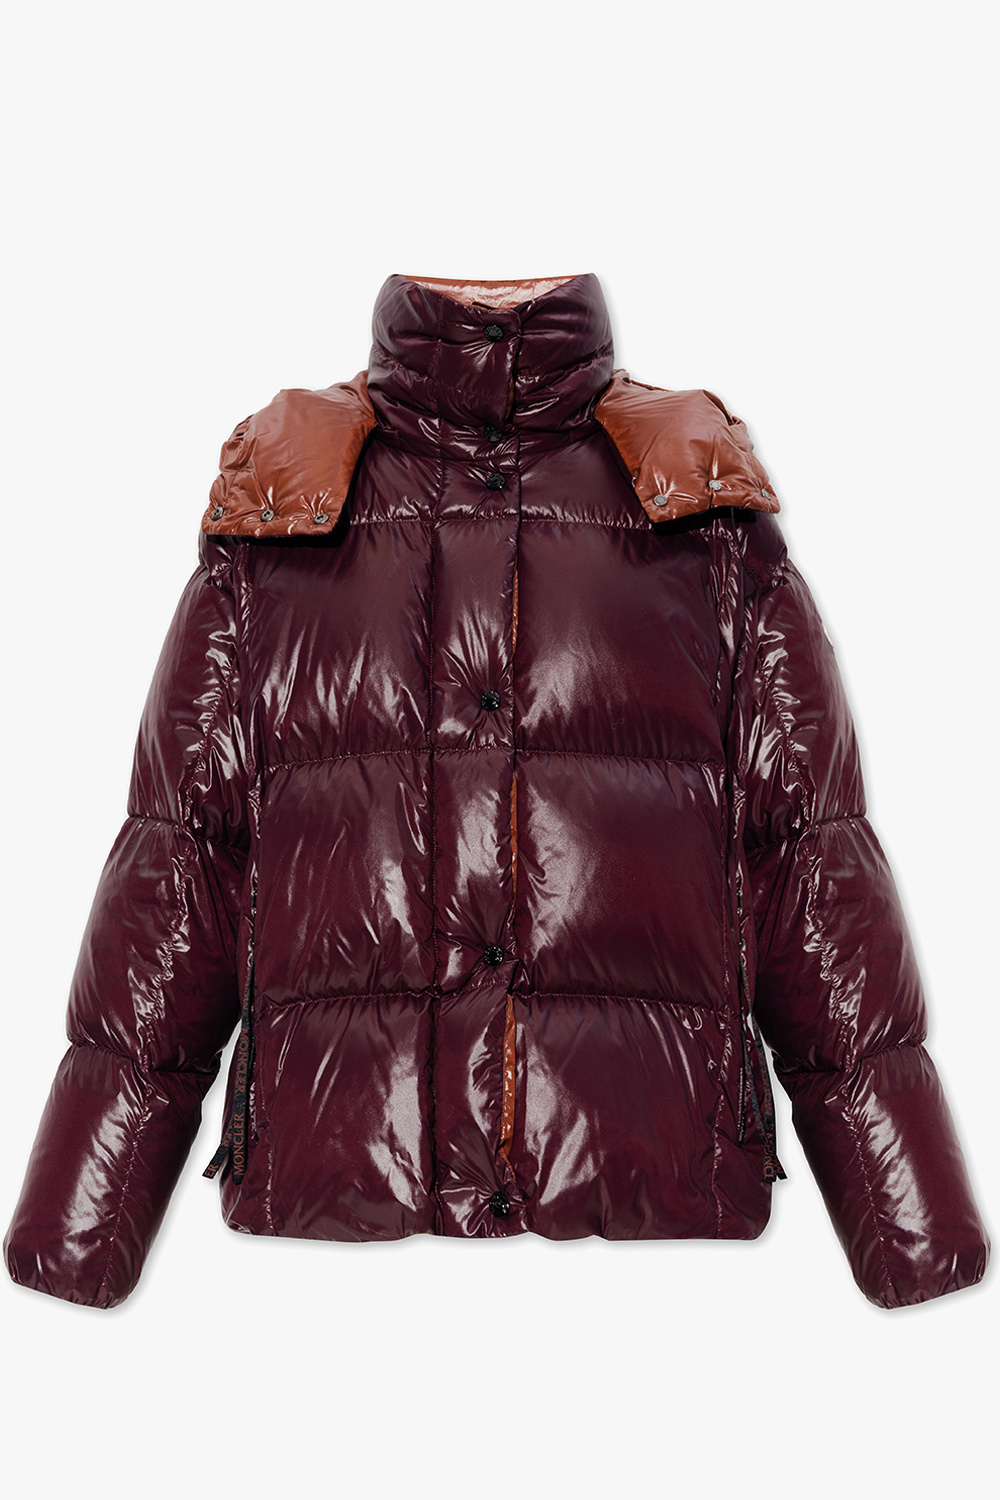 Burgundy 'Parana' down jacket Armour Moncler - GenesinlifeShops HK 